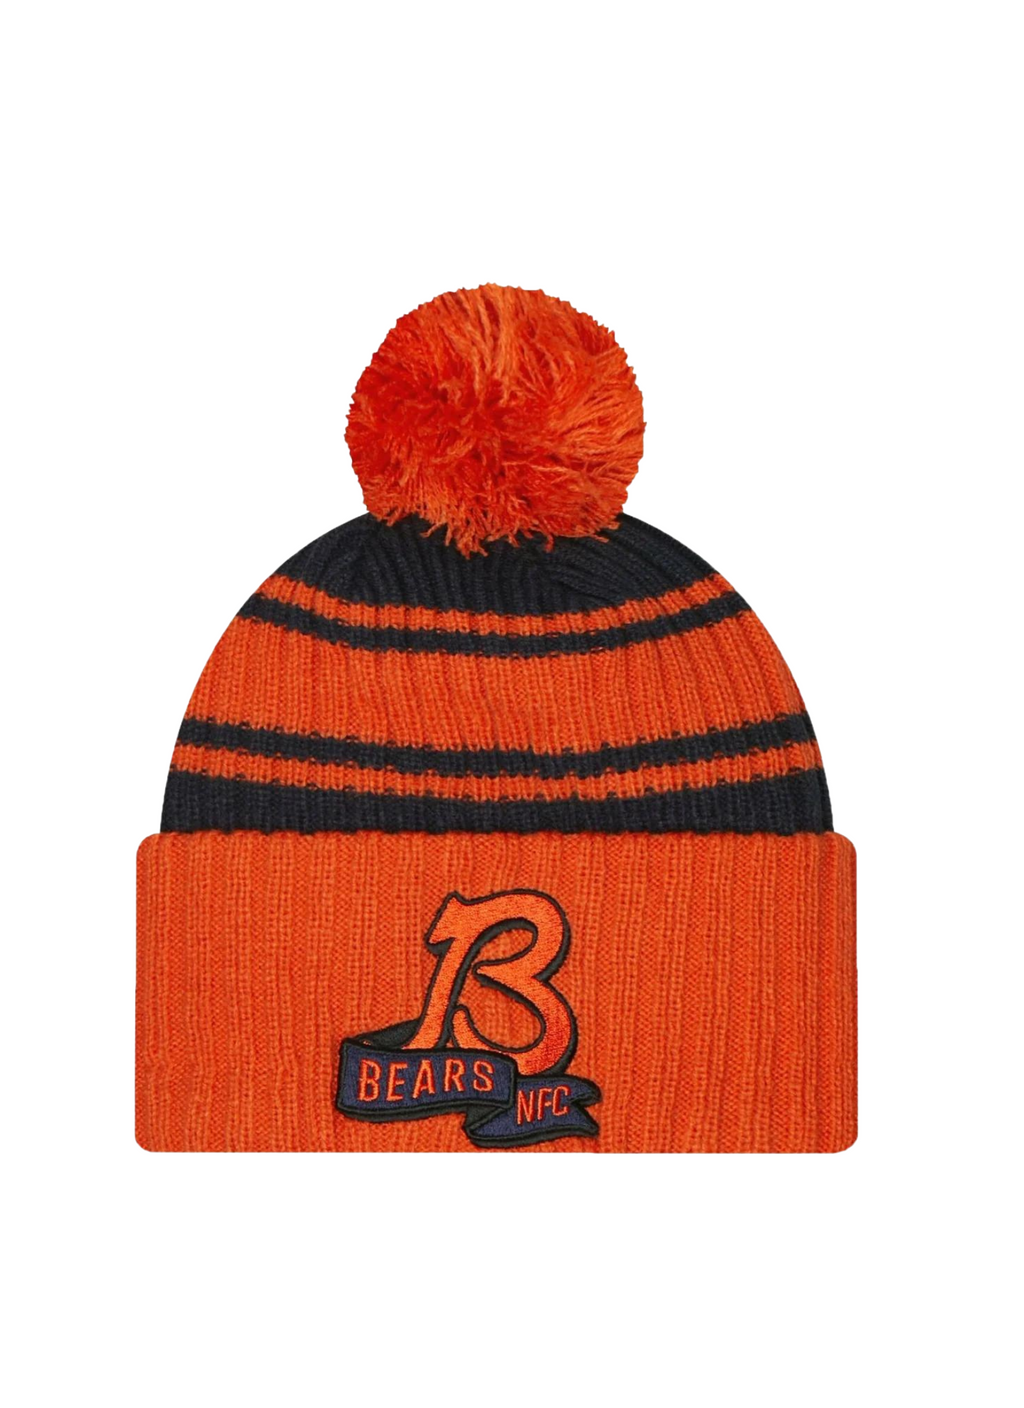 New Era NFL Bears Knit Beanie Orange